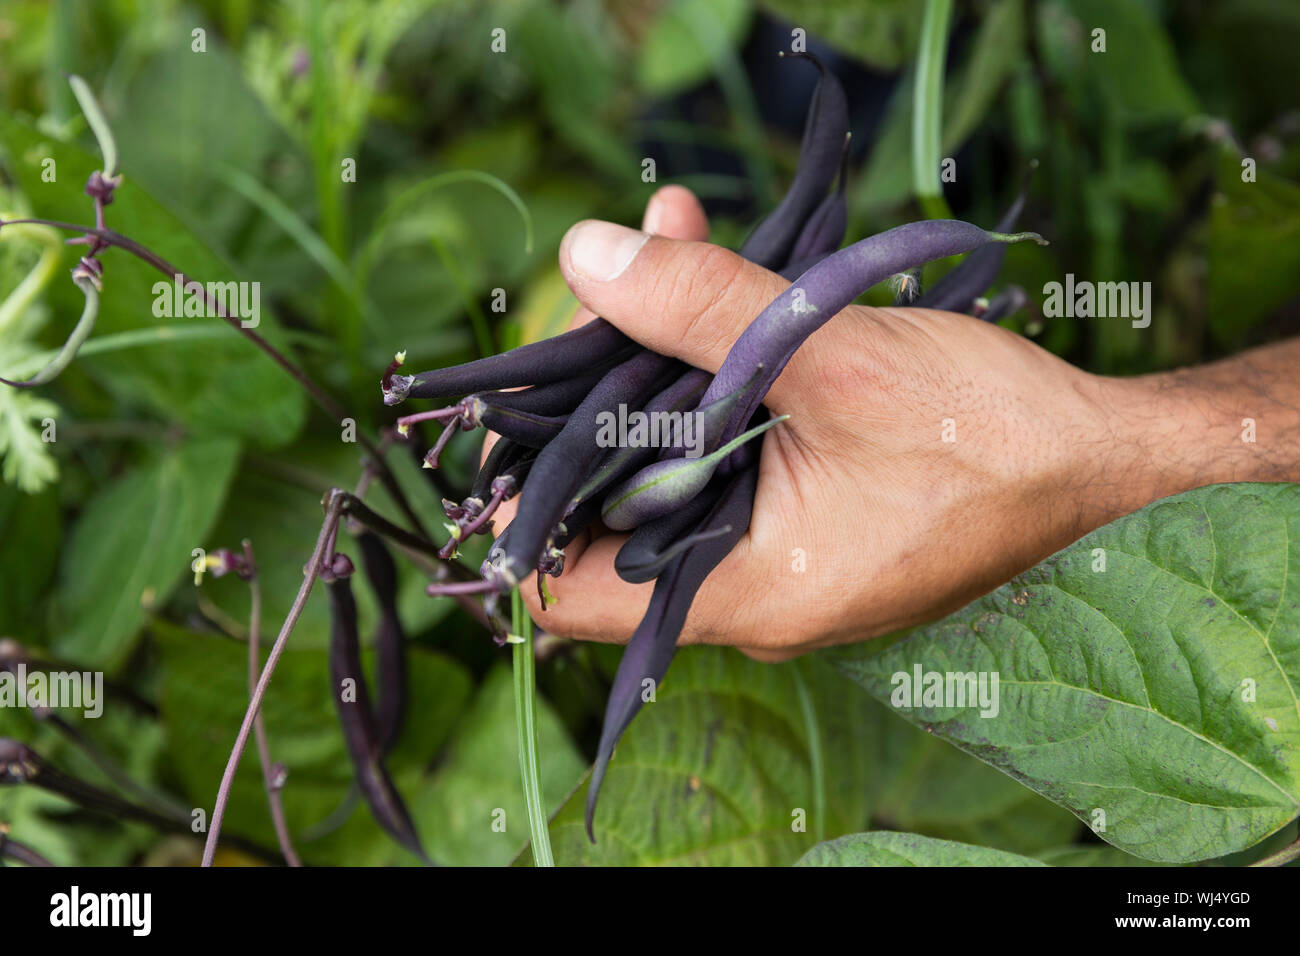 Man harvesting fresh, organic purple beans Stock Photo